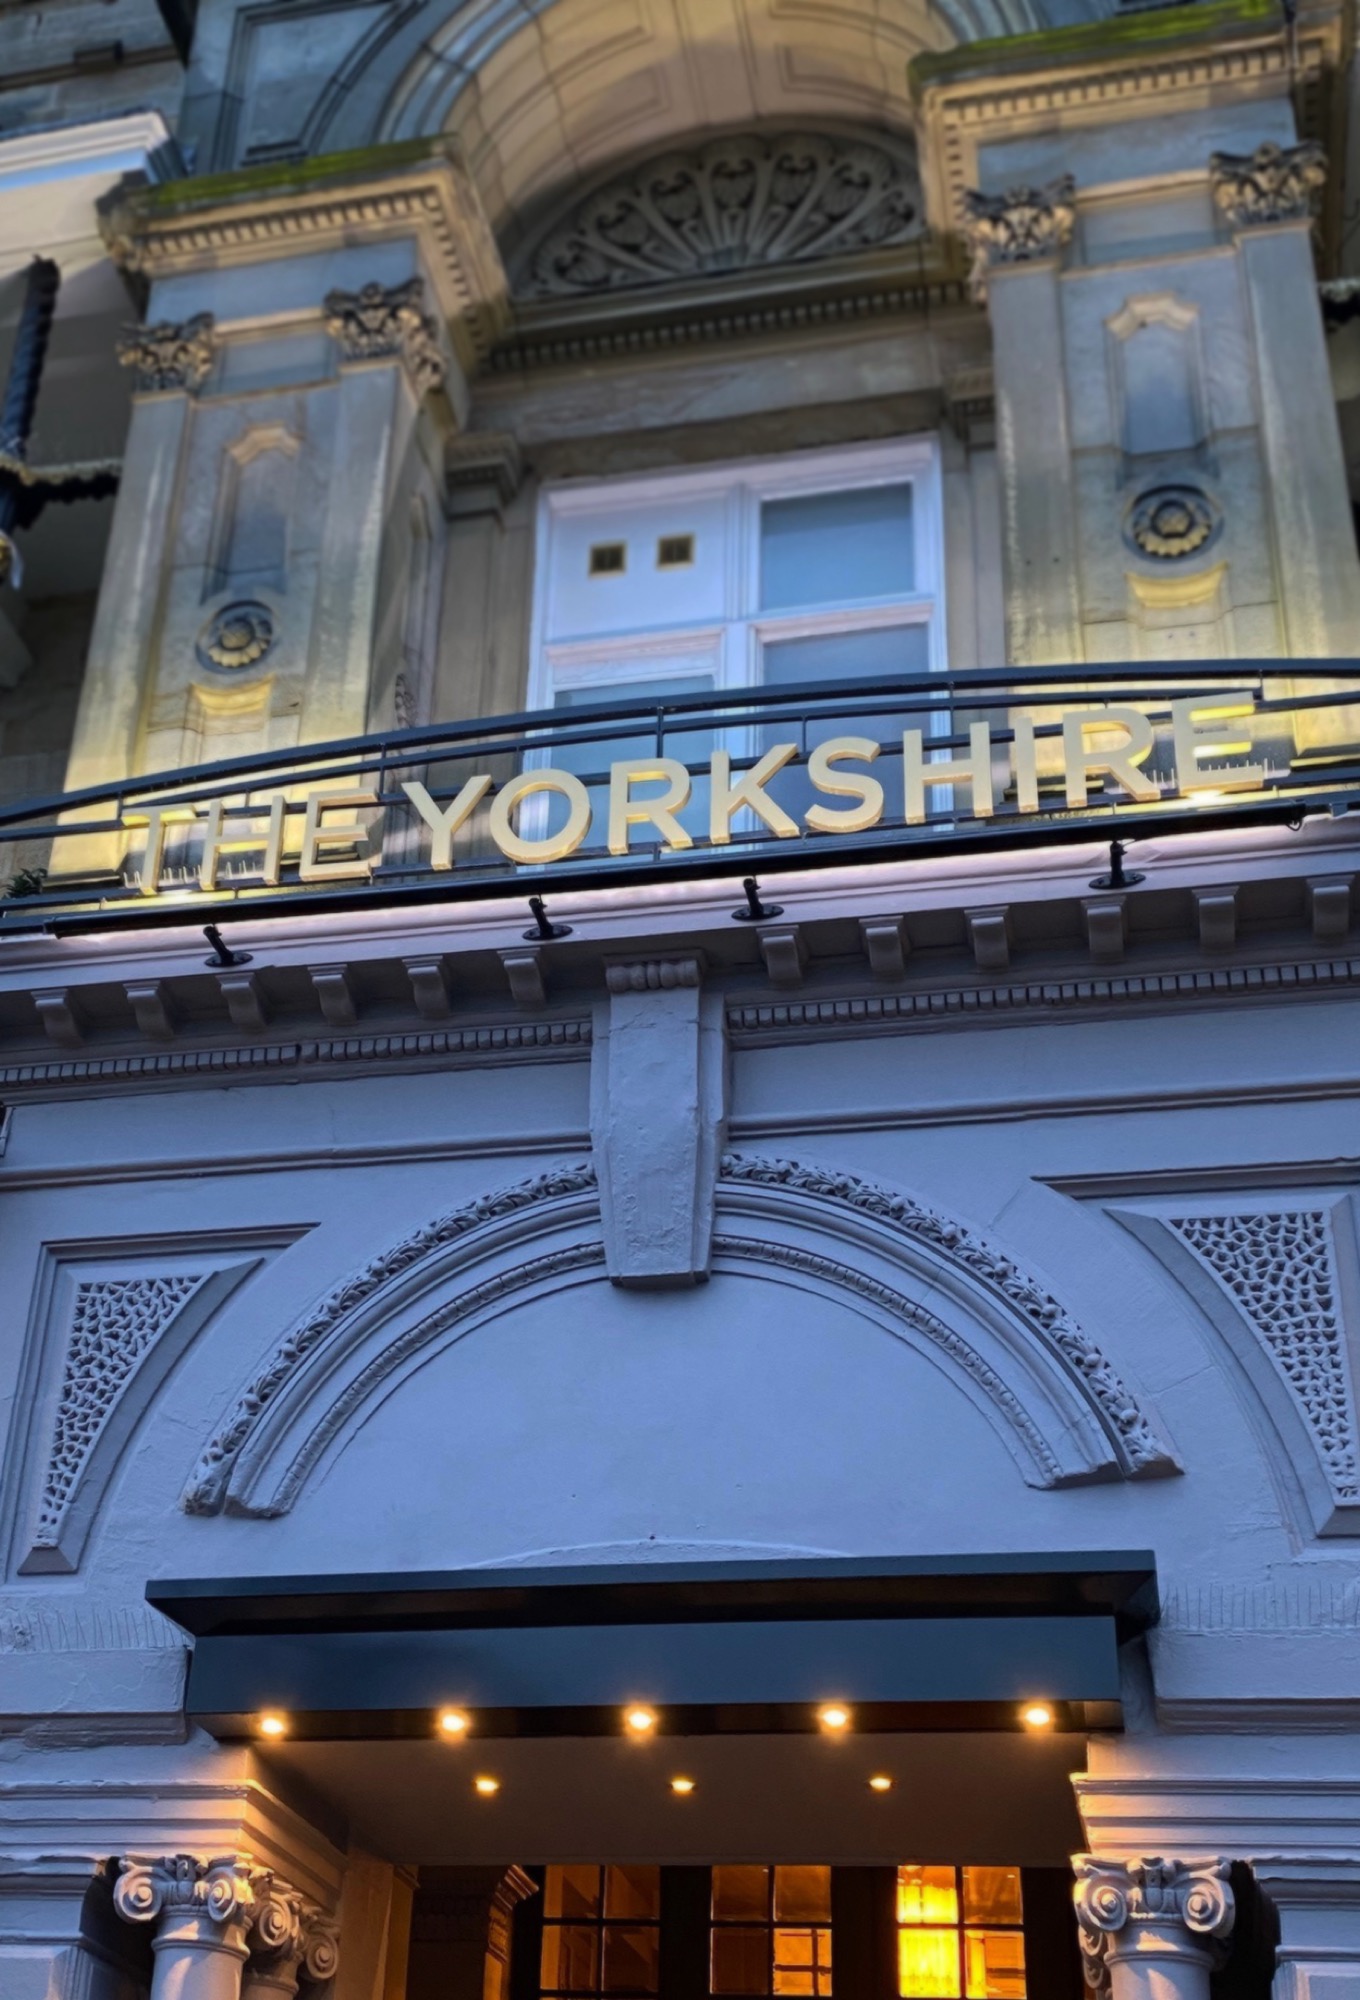 The Yorkshire restaurant gold sign in Harrogate